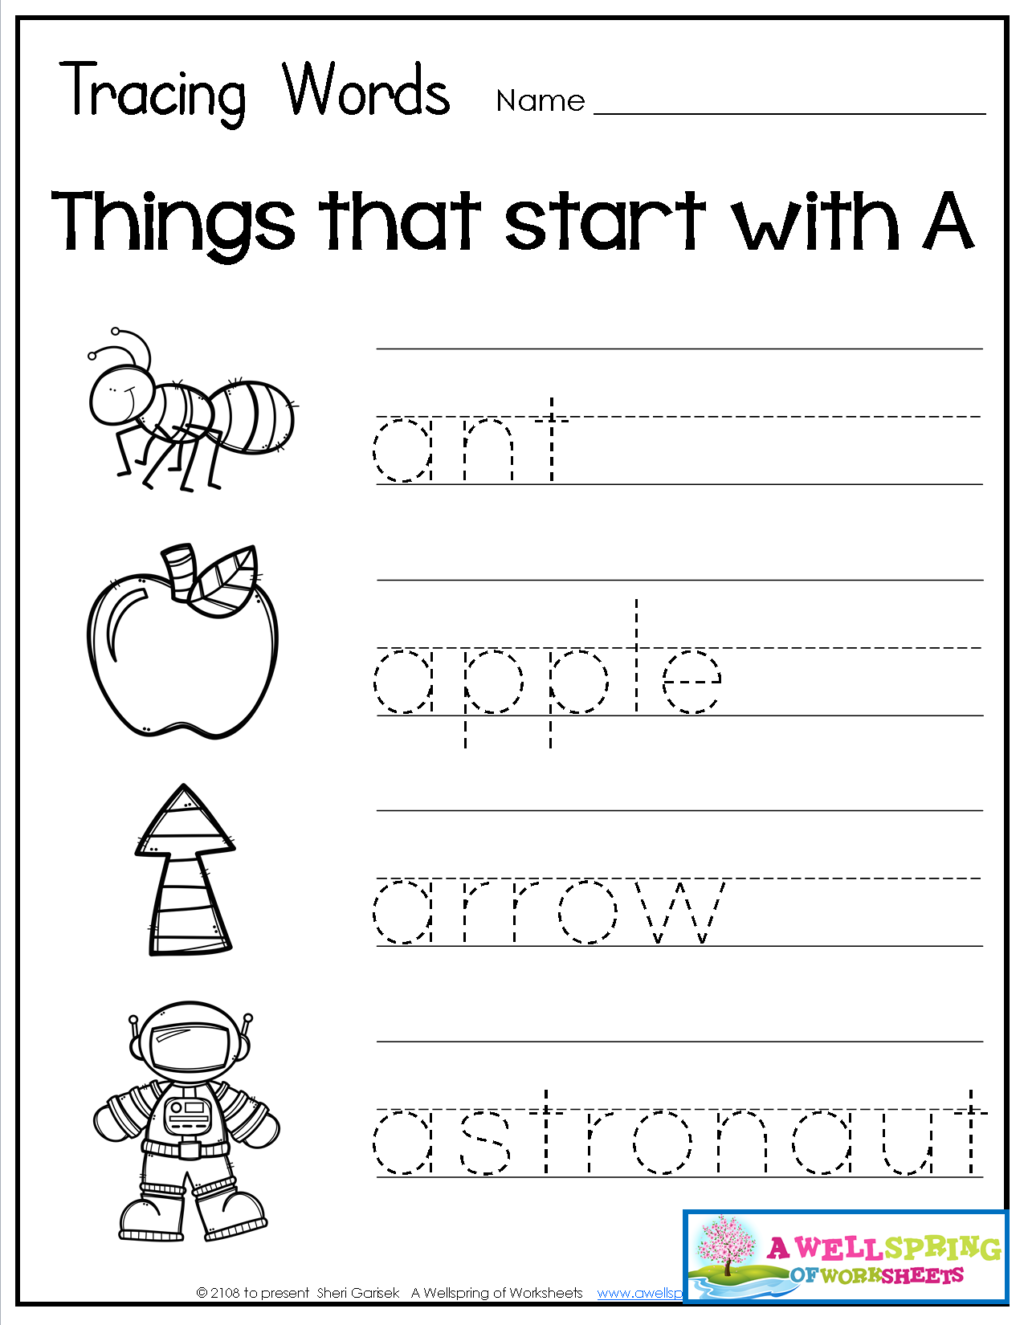 preschool-word-tracing-worksheets-alphabetworksheetsfreecom-name-name